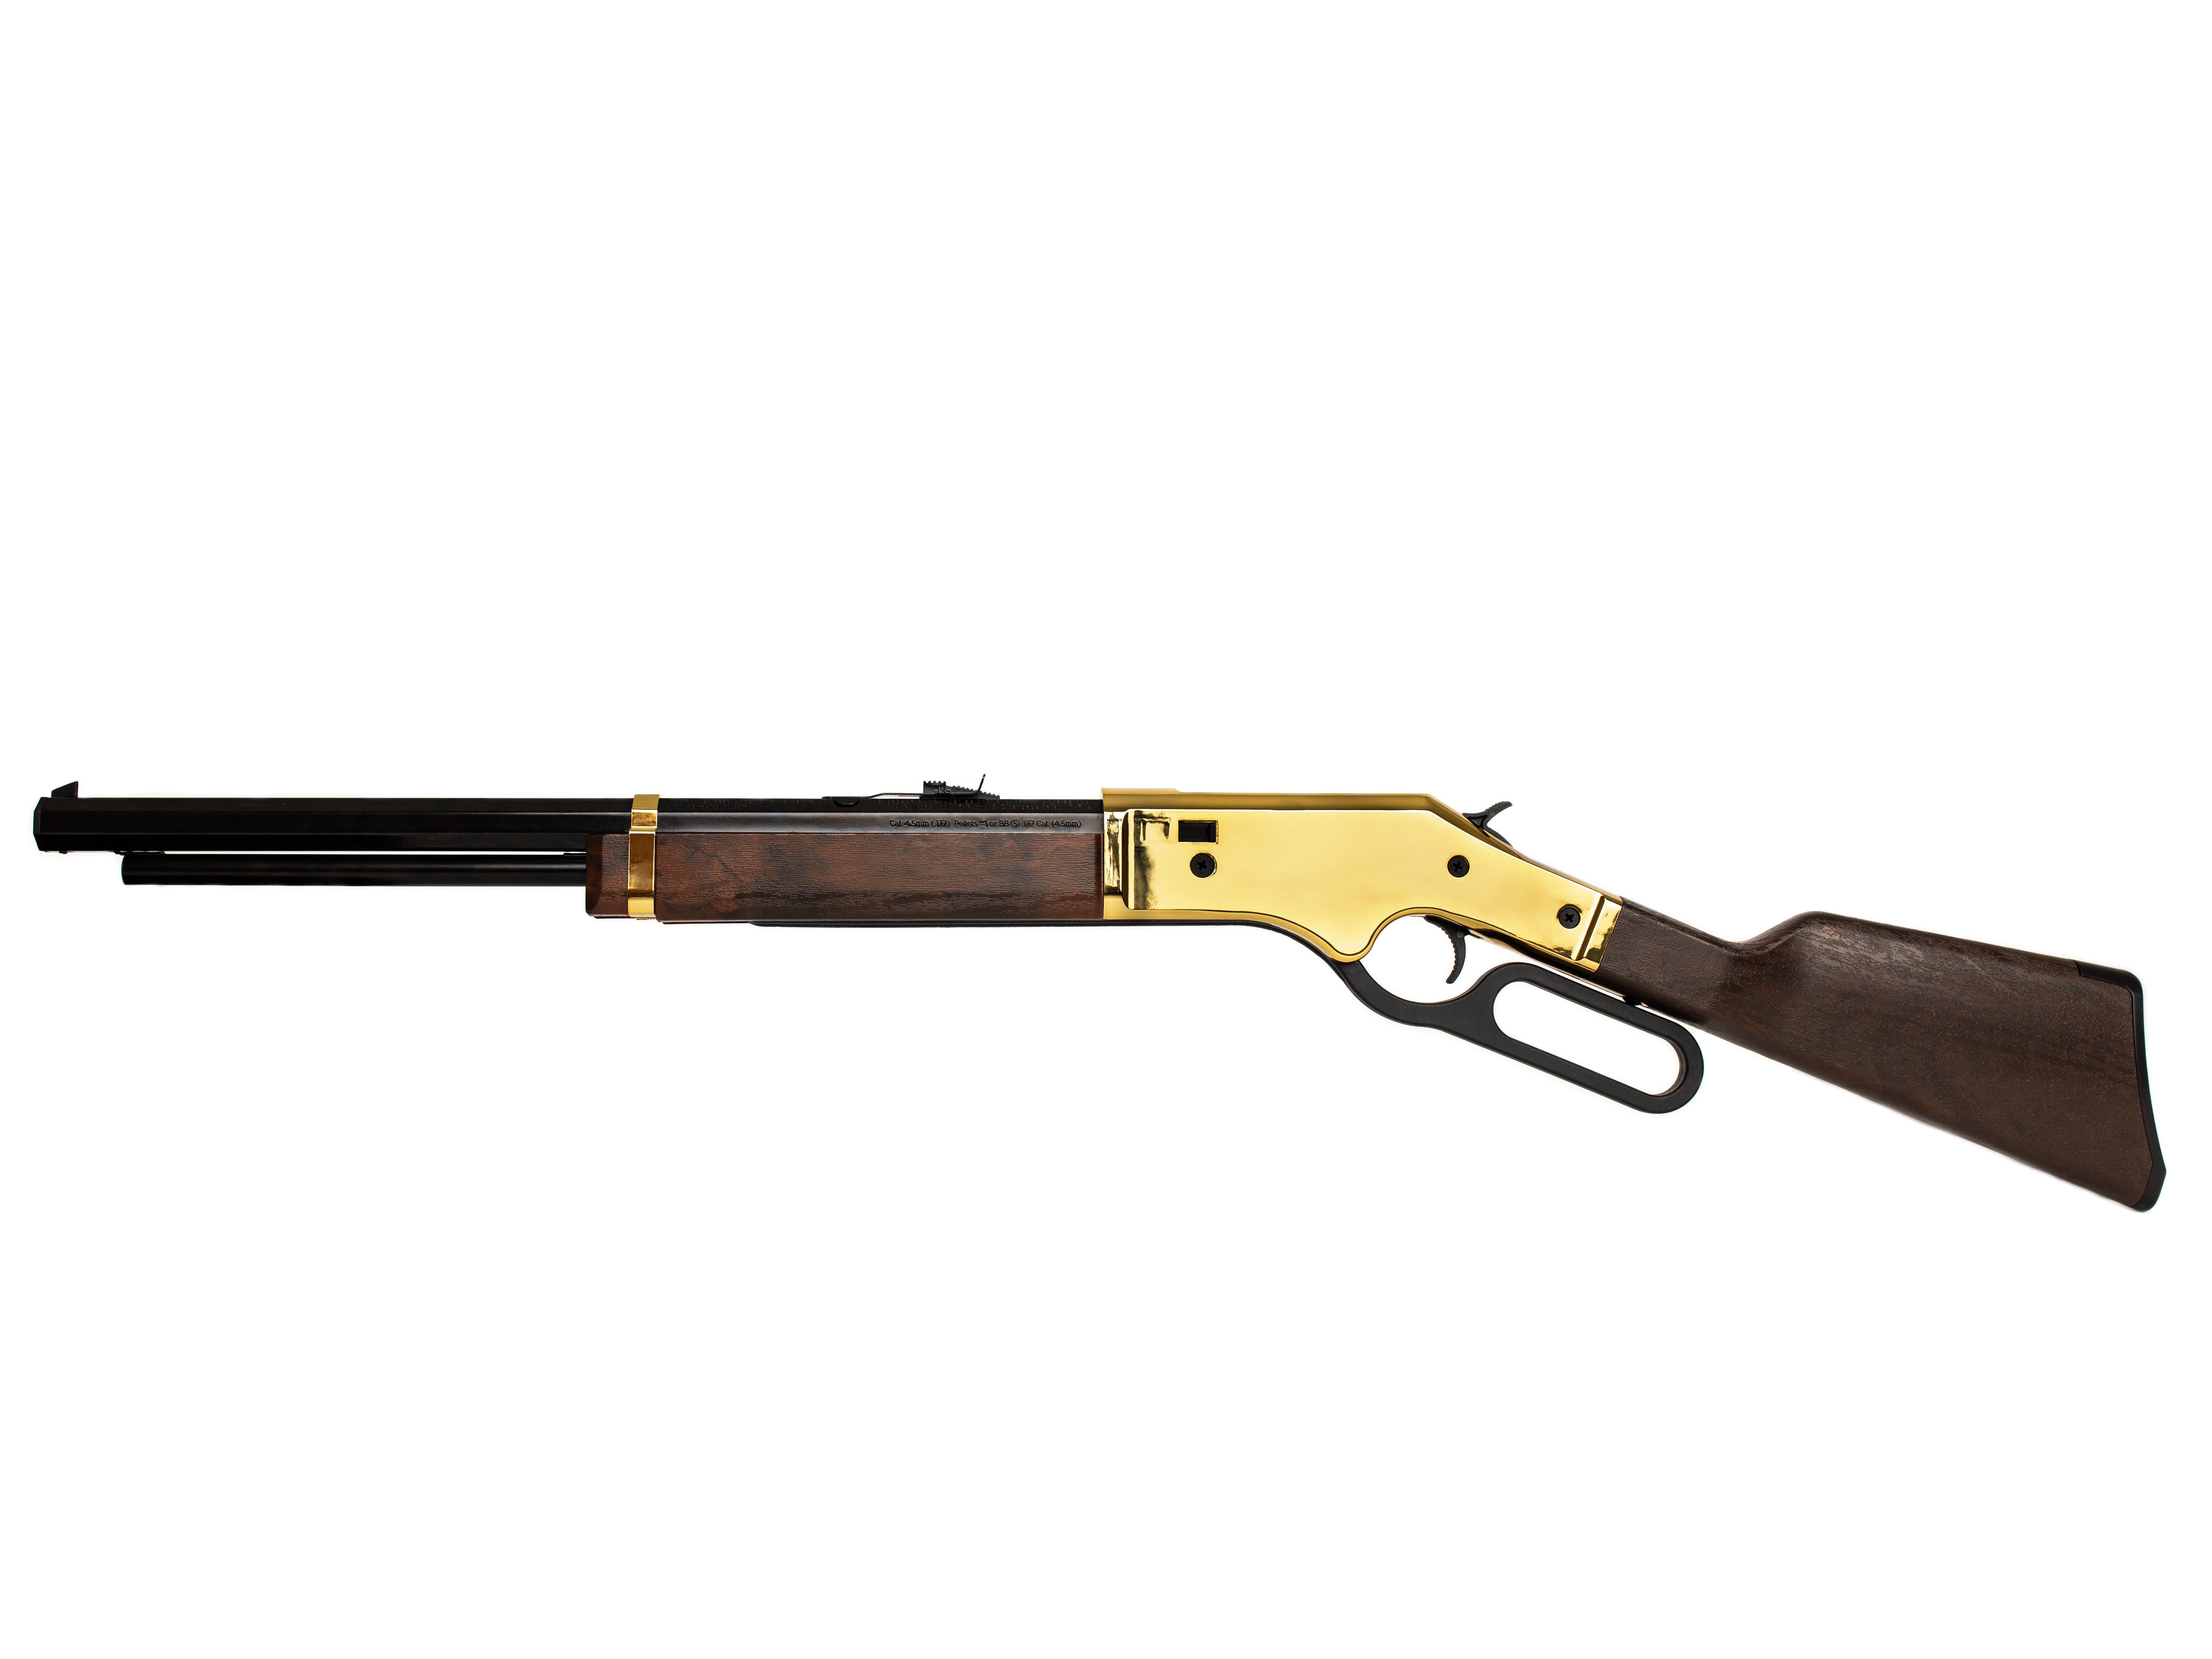  Barra 1911 BB Gun Kit, Spring Powered Air Rifle, BB Pistol, BB  Guns for Kids & Adults, Includes Gel Target and Ammo (250 BBS), 200 FPS,  177 Cal BB Pellets